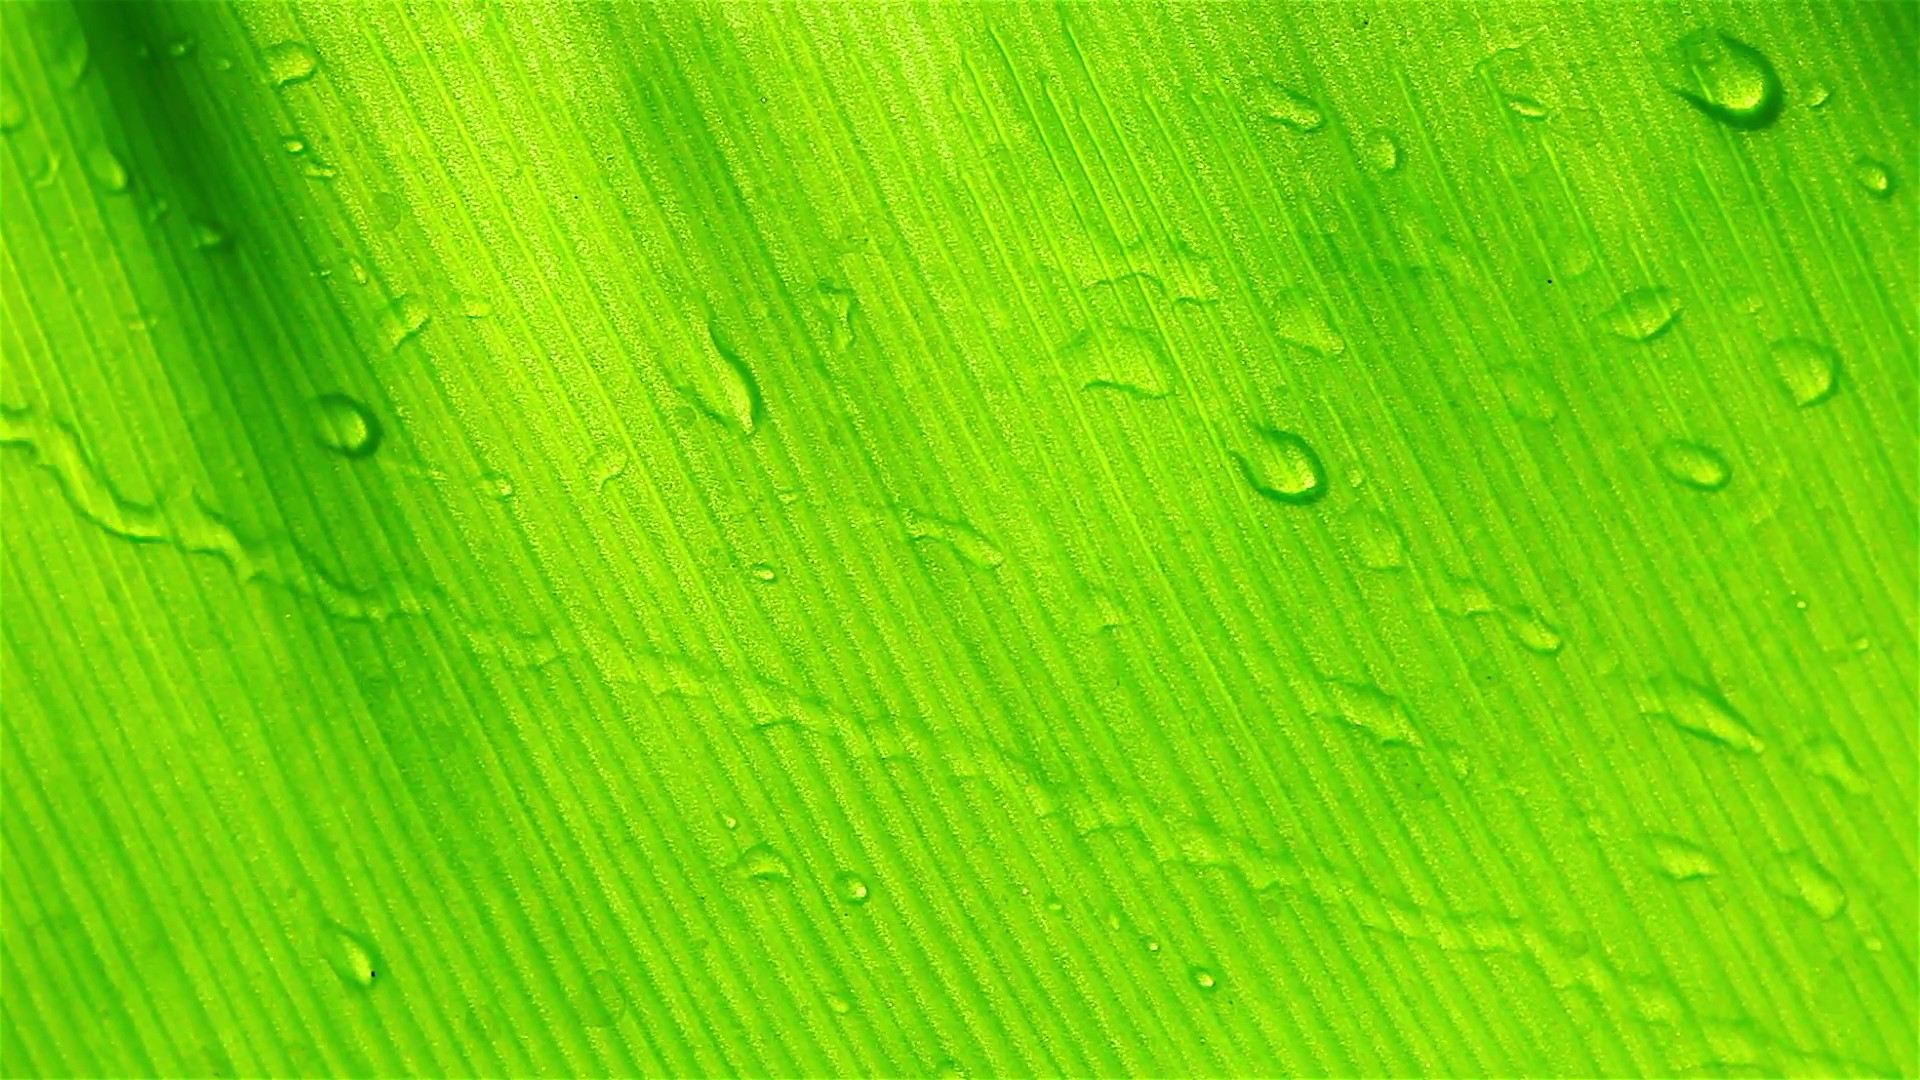 1920x1080 HD: Water drops on green leaf background,  Stock Video Footage -  VideoBlocks